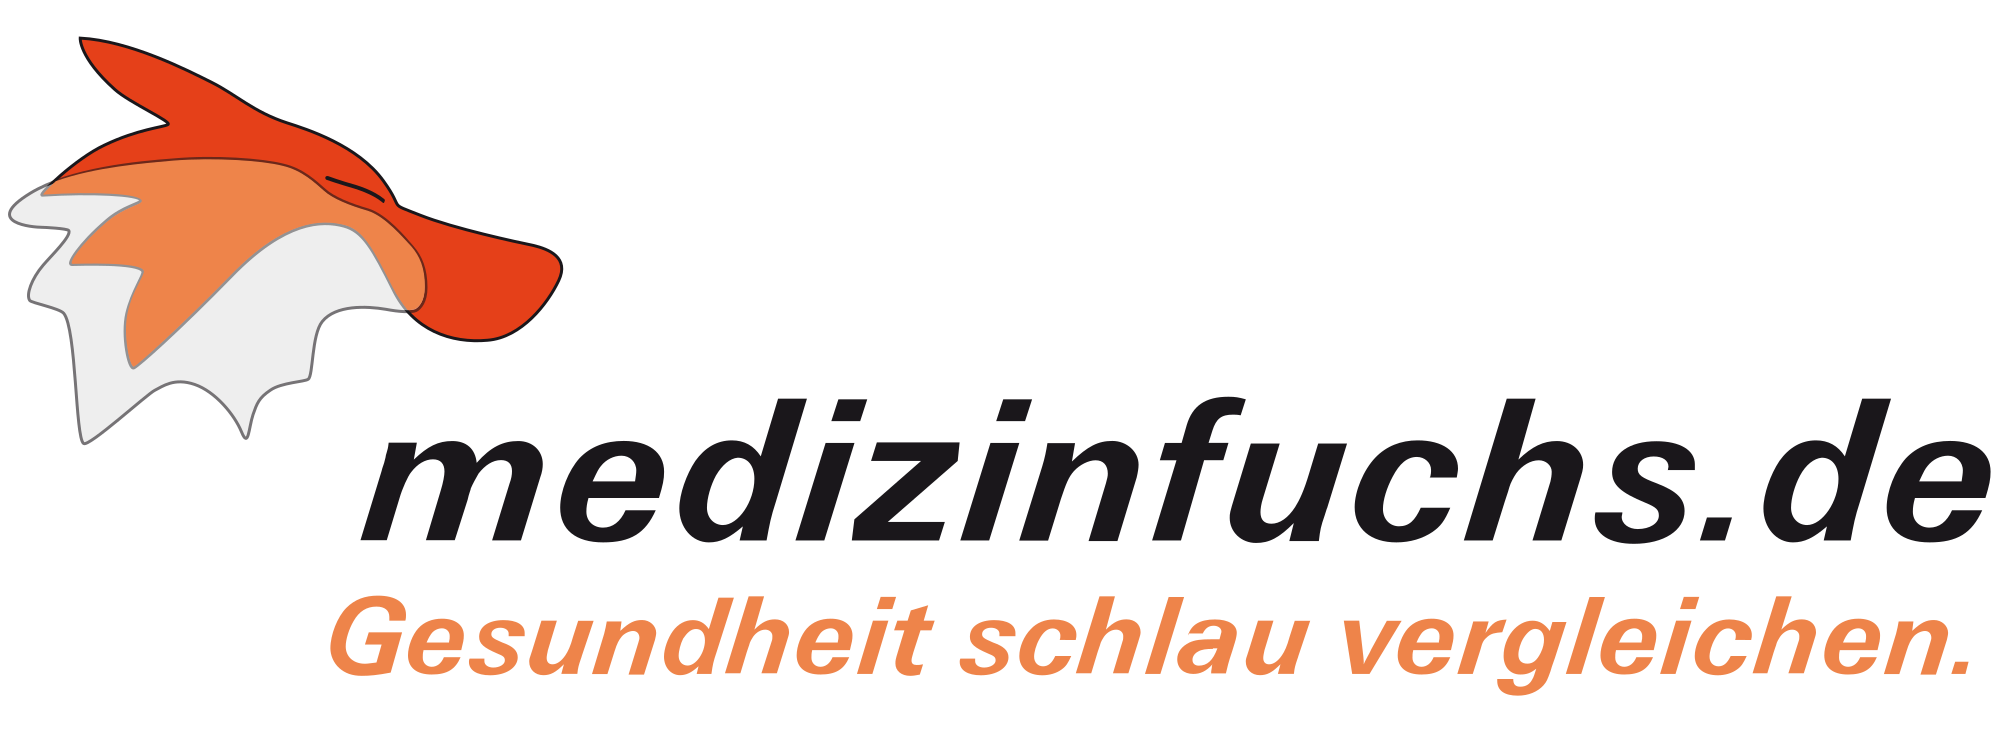 Medizinfuchs-logo_de.svg